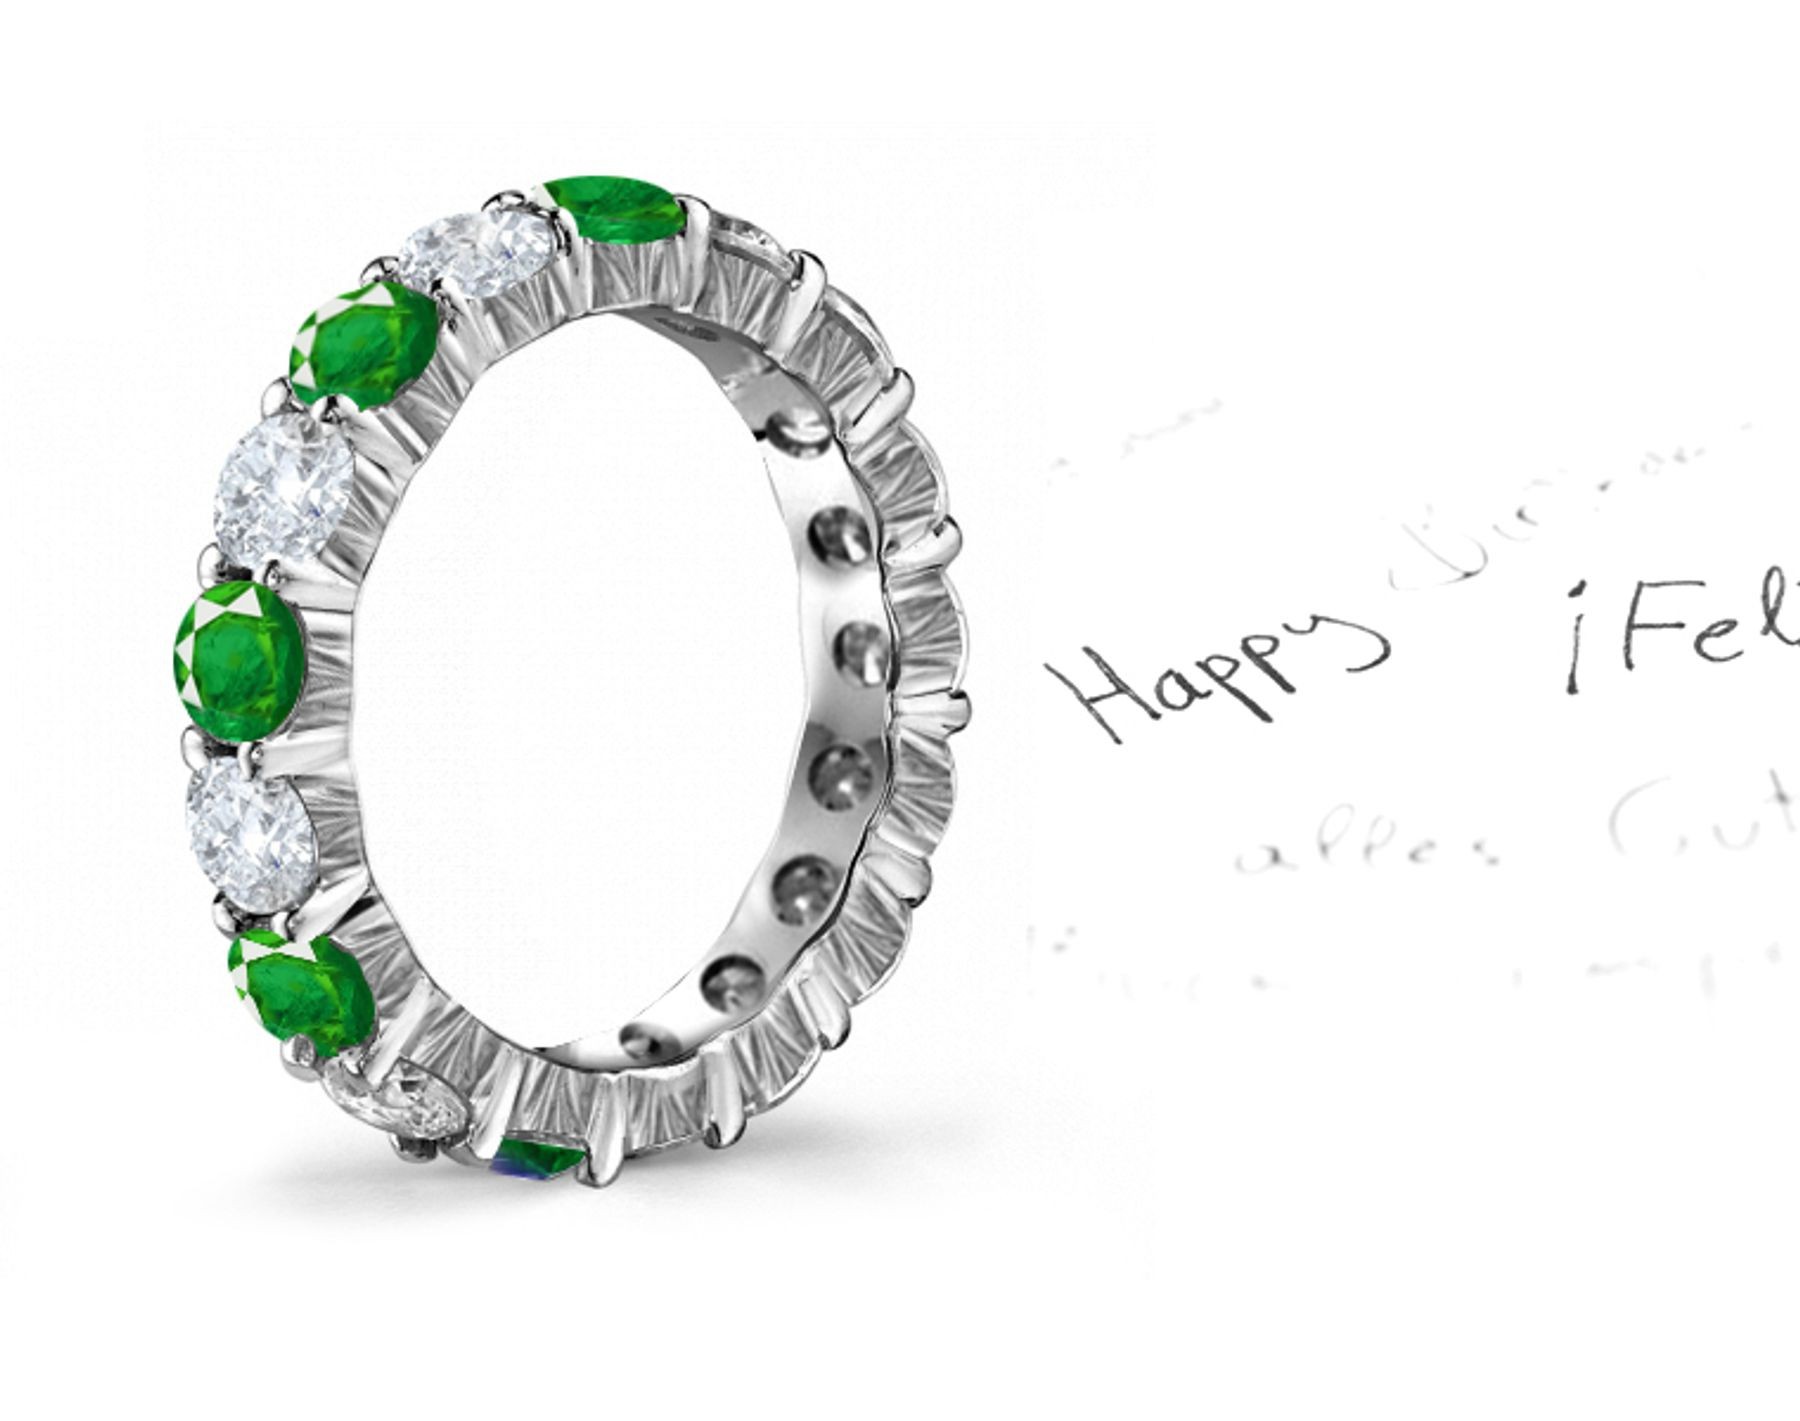 Elaborately Decorated: Masterfully Hand Engraved Diamond Emerald Ring Design in 14k White Gold